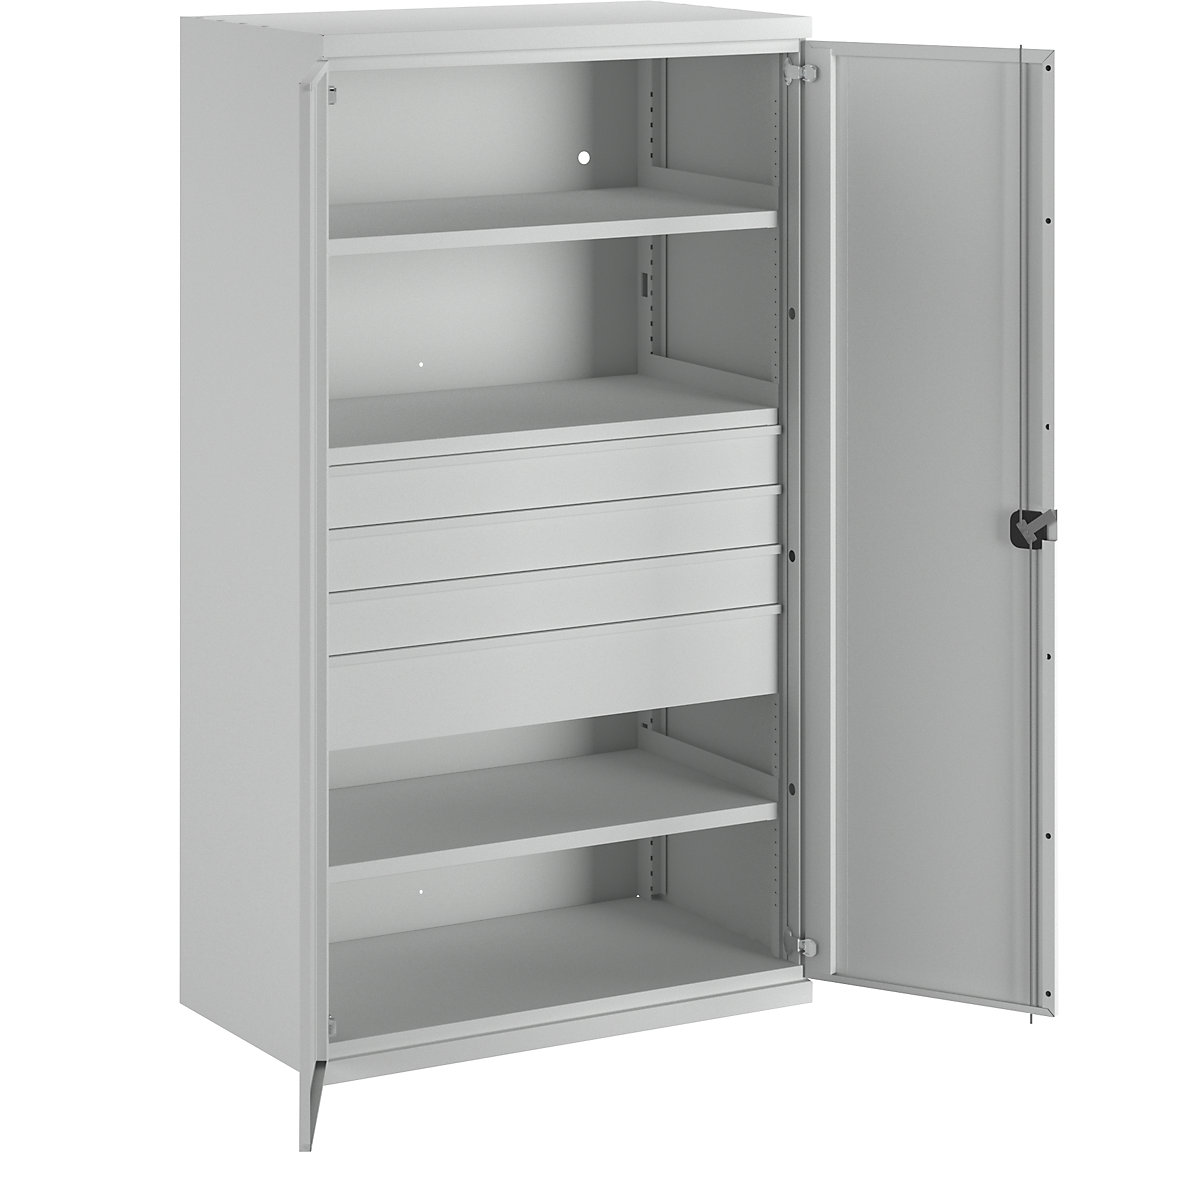 Heavy duty cupboard made of steel – eurokraft pro, 3 shelves, drawers 3 x 120 mm, 1 x 180 mm high, light grey / light grey-2